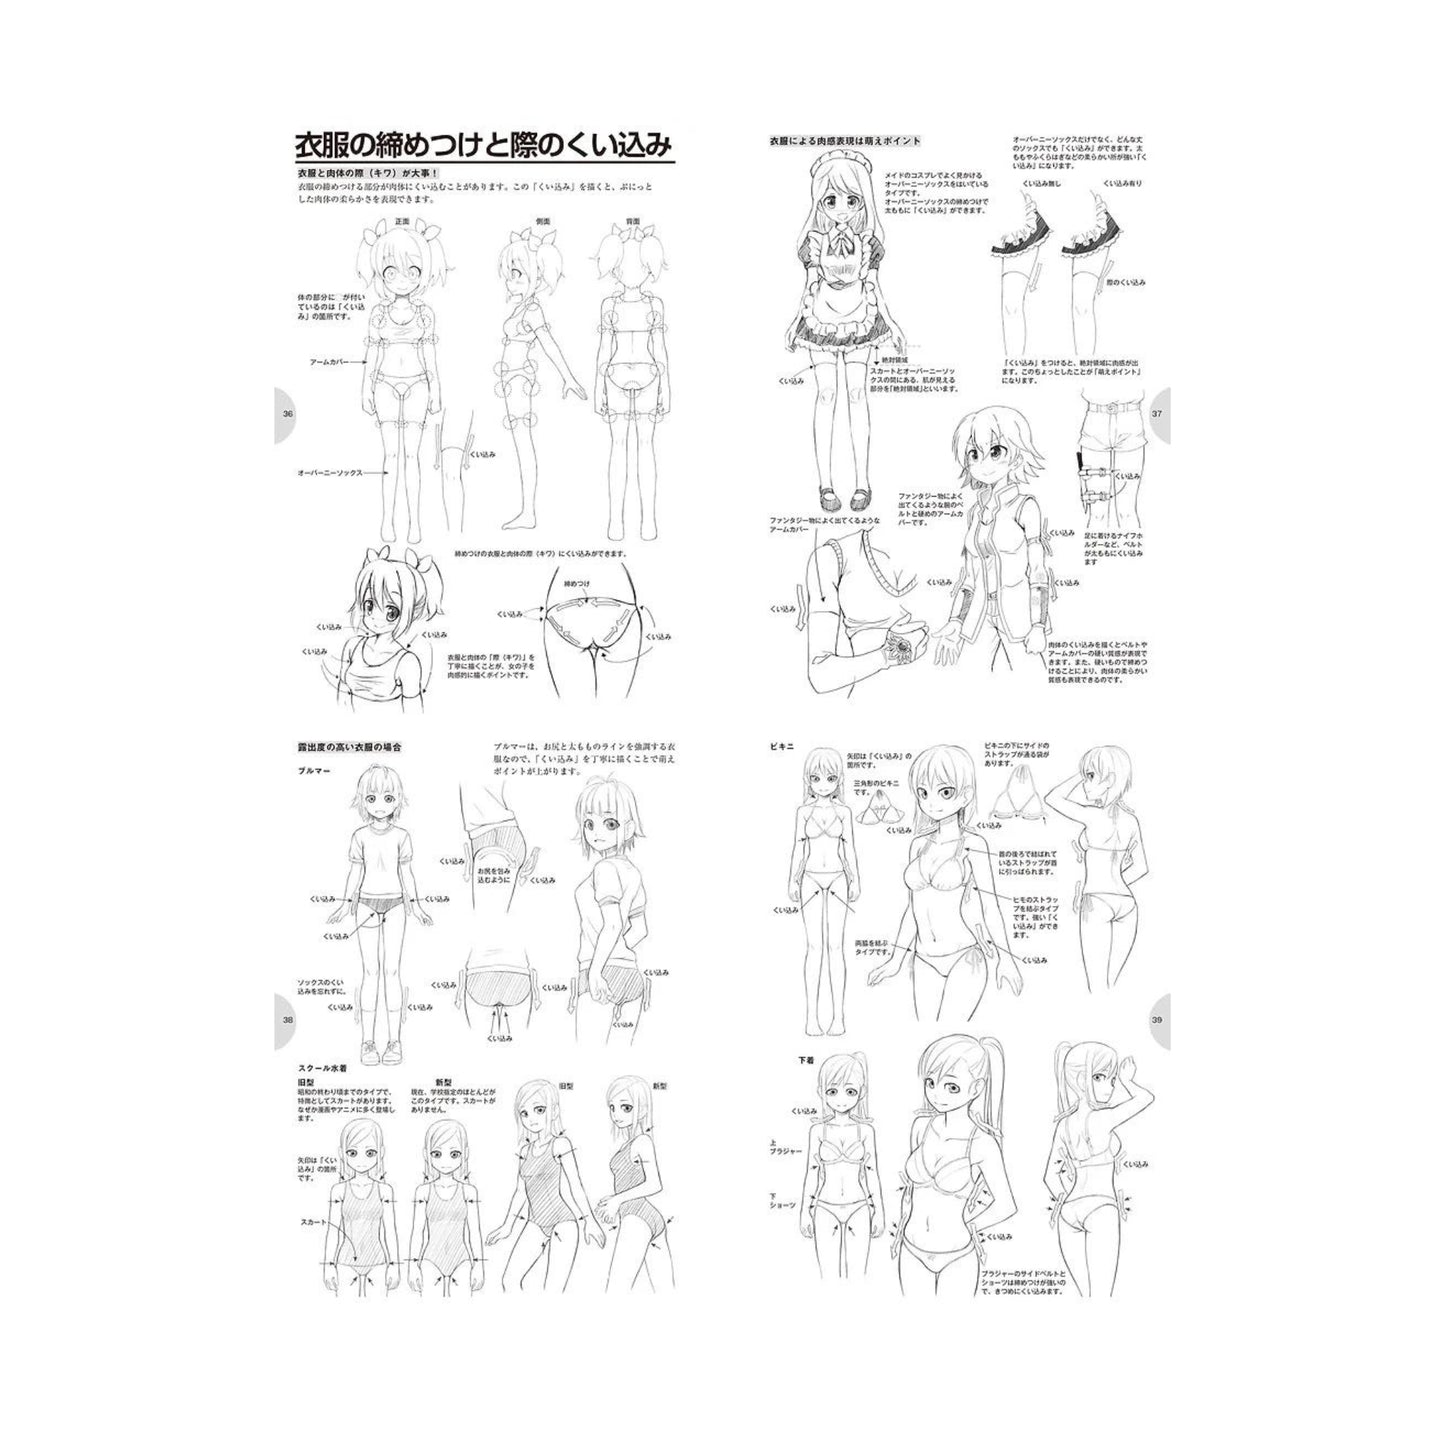 How to draw - jap. Zeichenbuch - Moe Charas - Kostüme